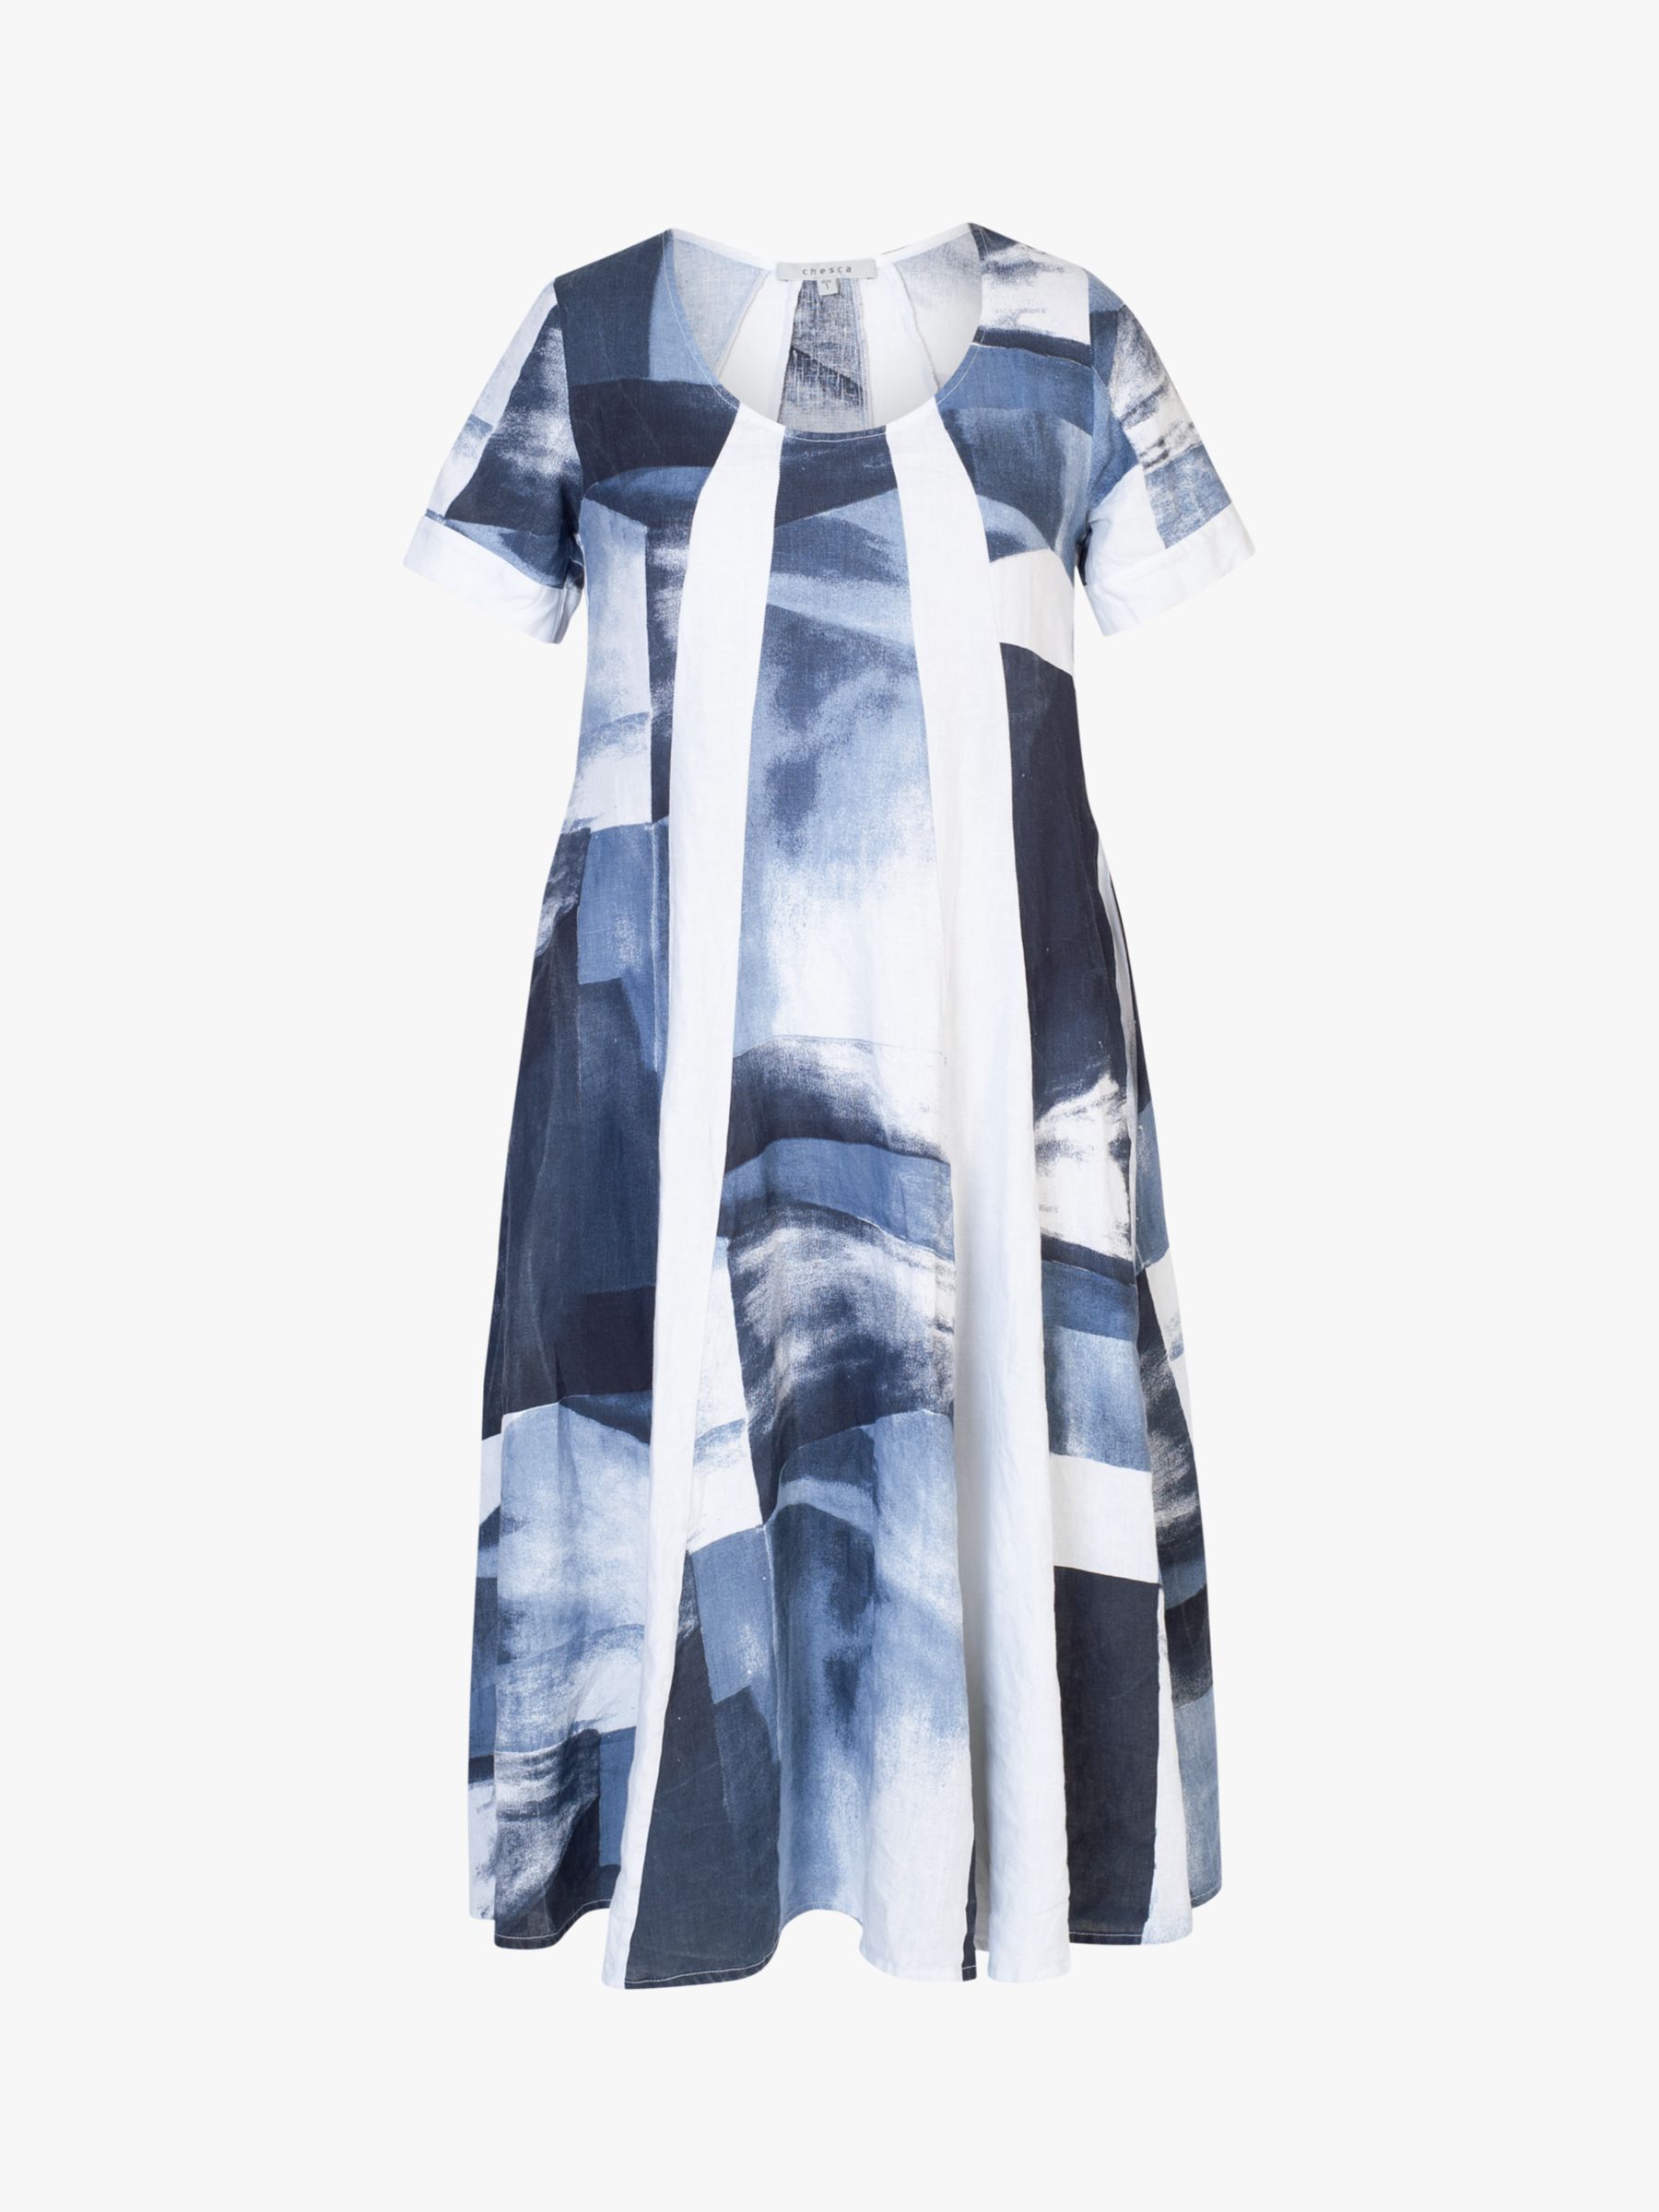 chesca Abstract Print Midi Linen Dress, White/Navy, 12